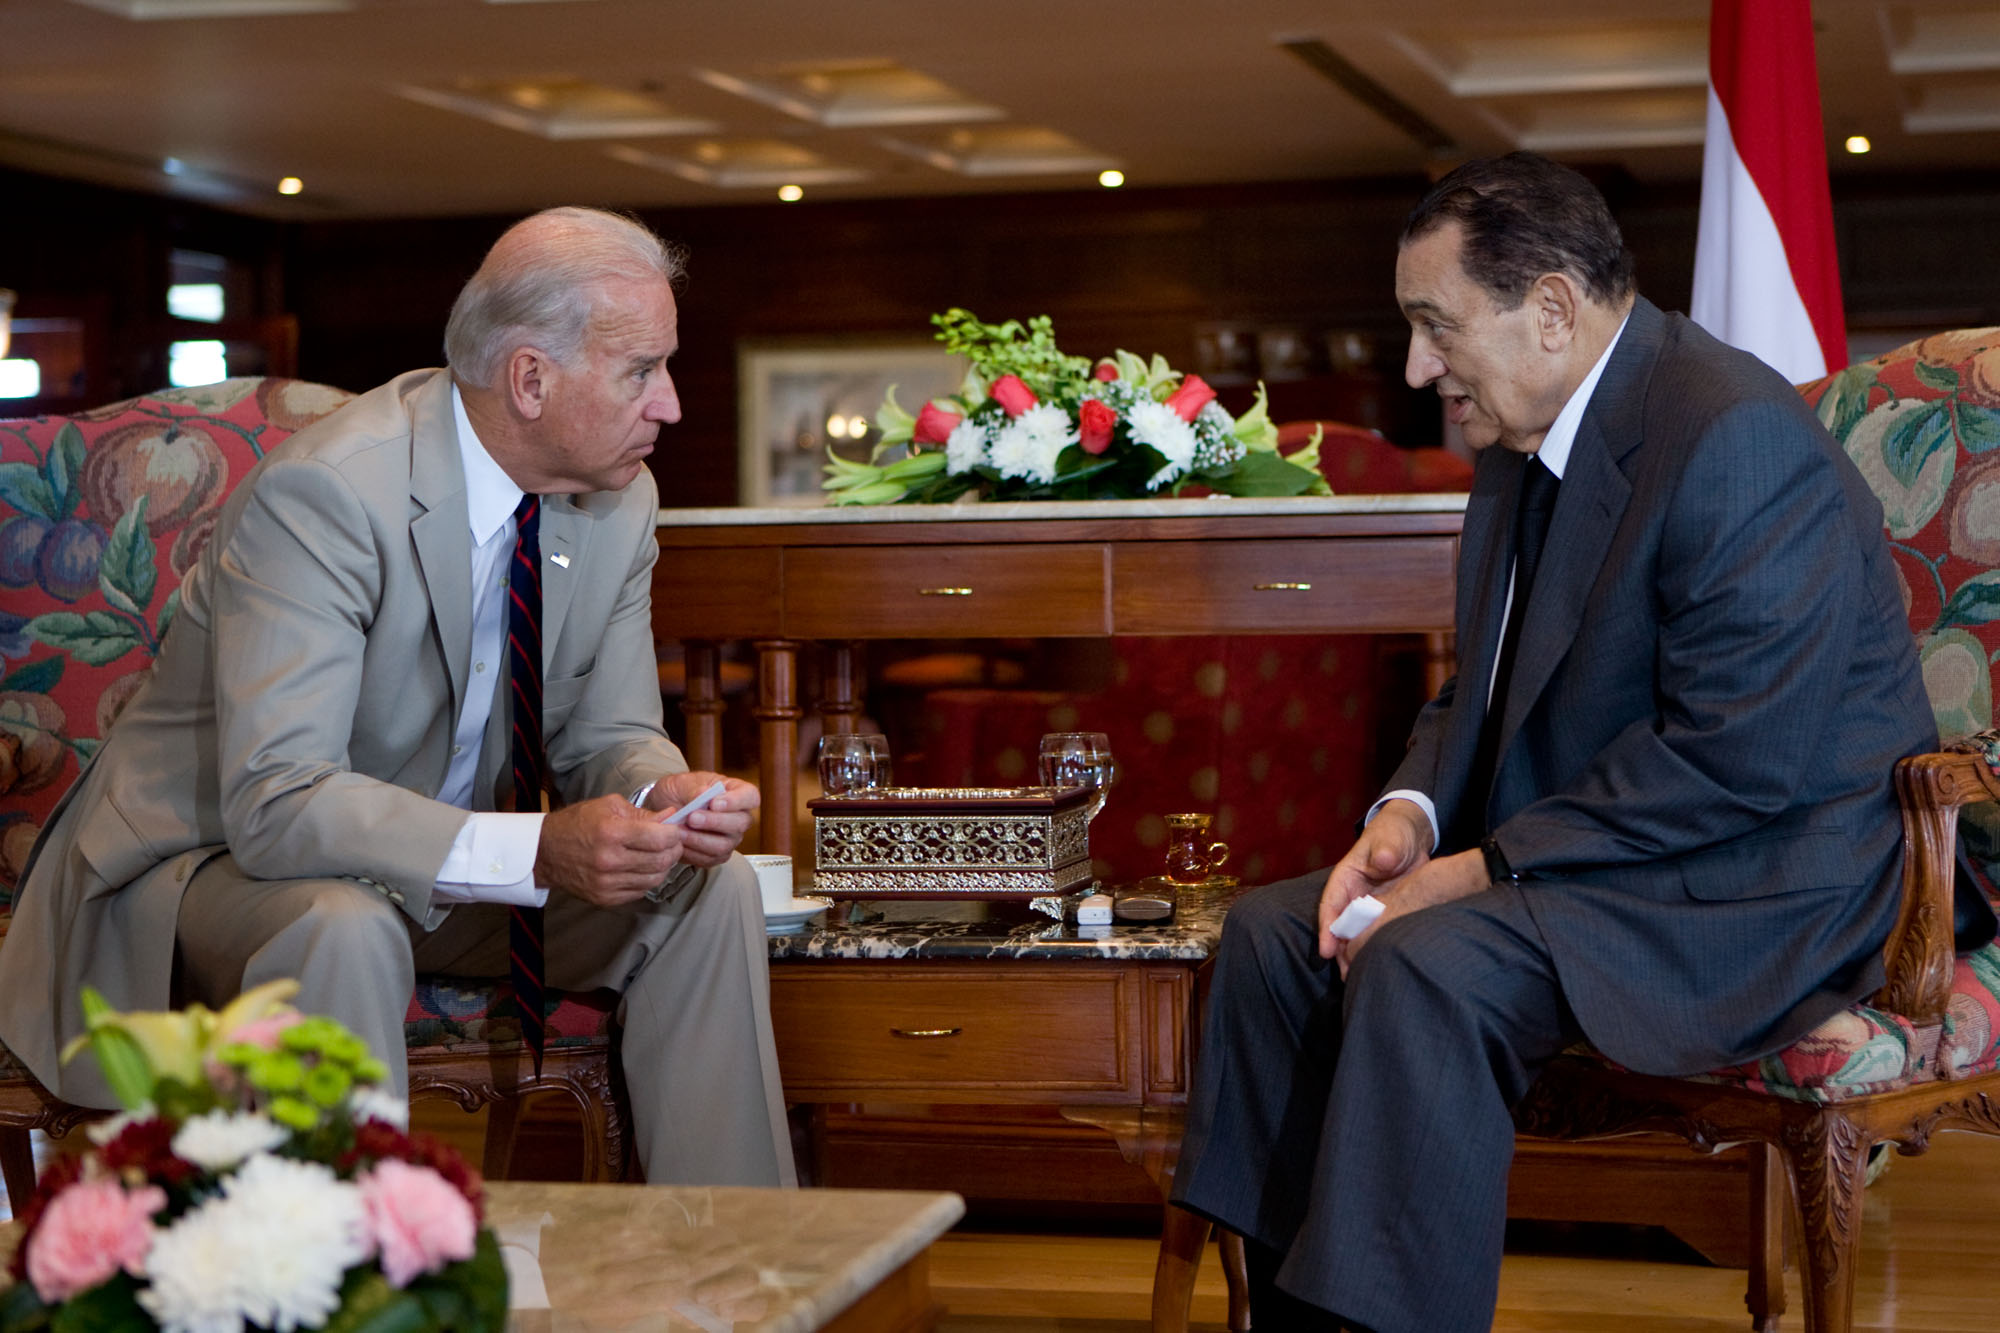 Vice President Joe Biden meets with Egyptian President Hosni Mubarak in Sharm El Sheikh, Egypt